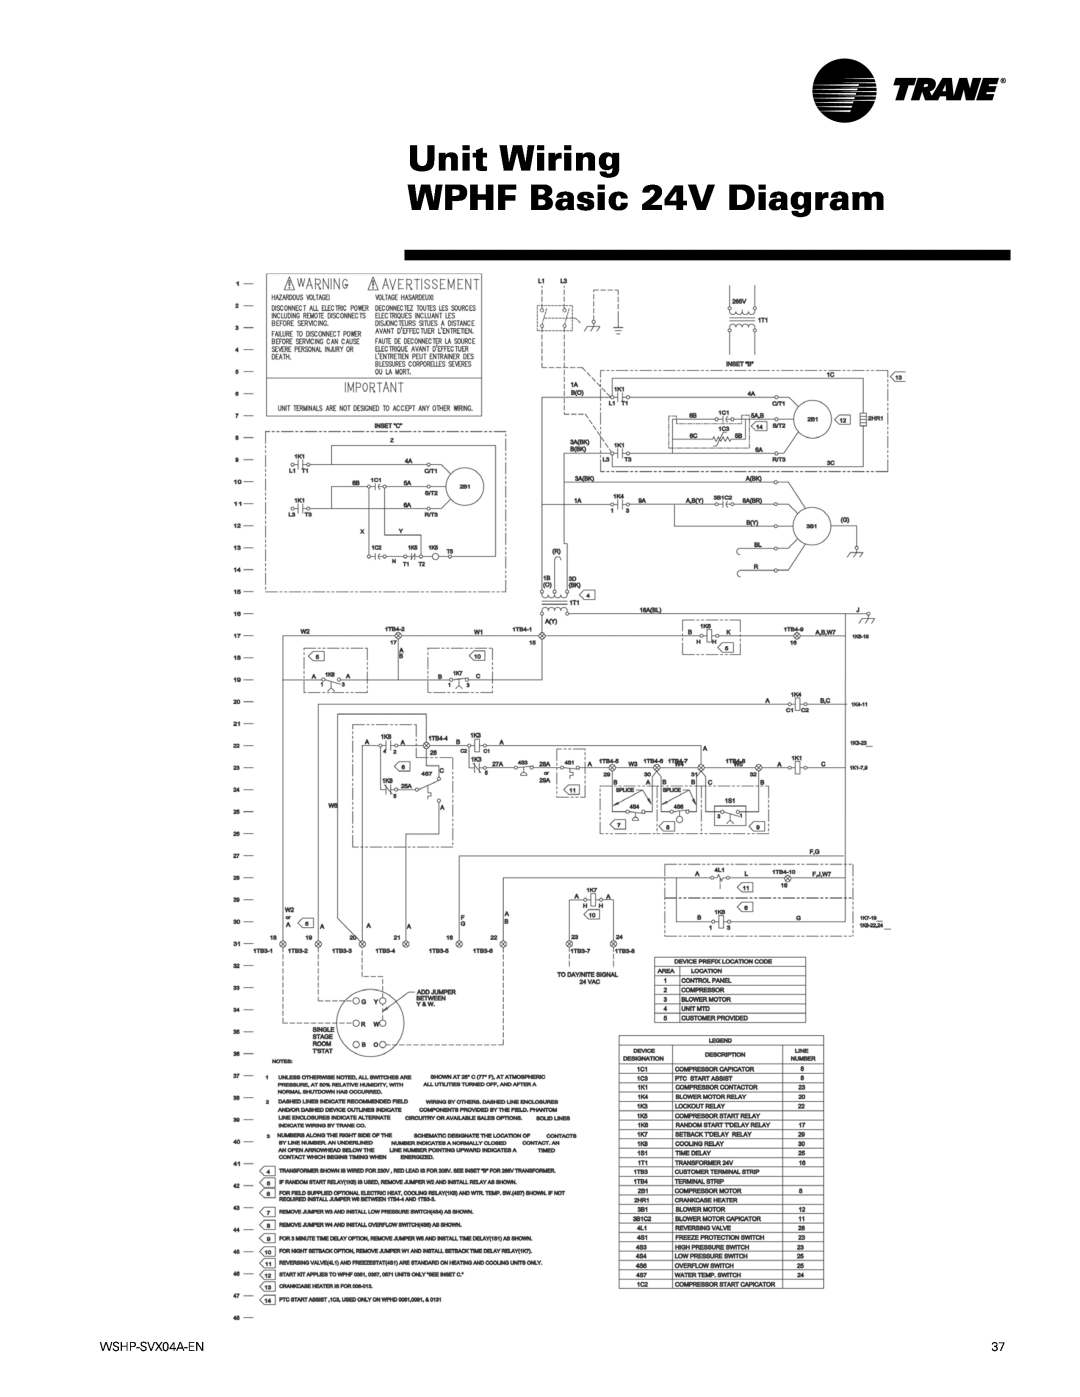 Trane WPVJ manual Unit Wiring WPHF Basic 24V Diagram, WSHP-SVX04A-EN 